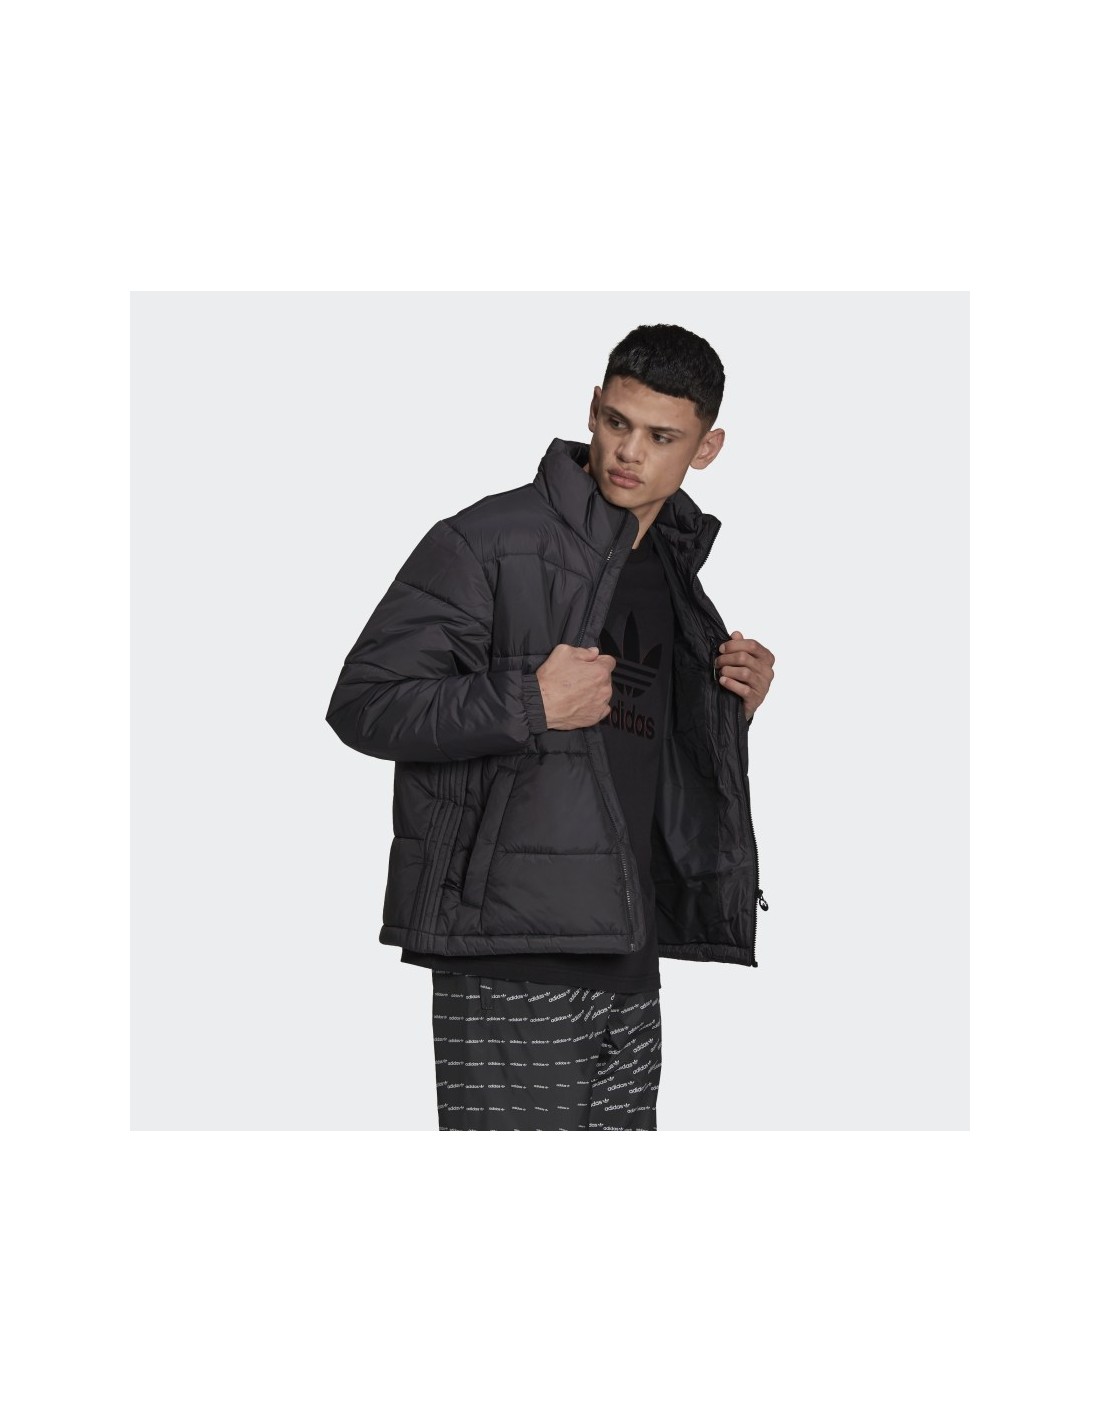 Adidas Originals Jacket H13551 Stand-Up Collar Black Padded Puffer 